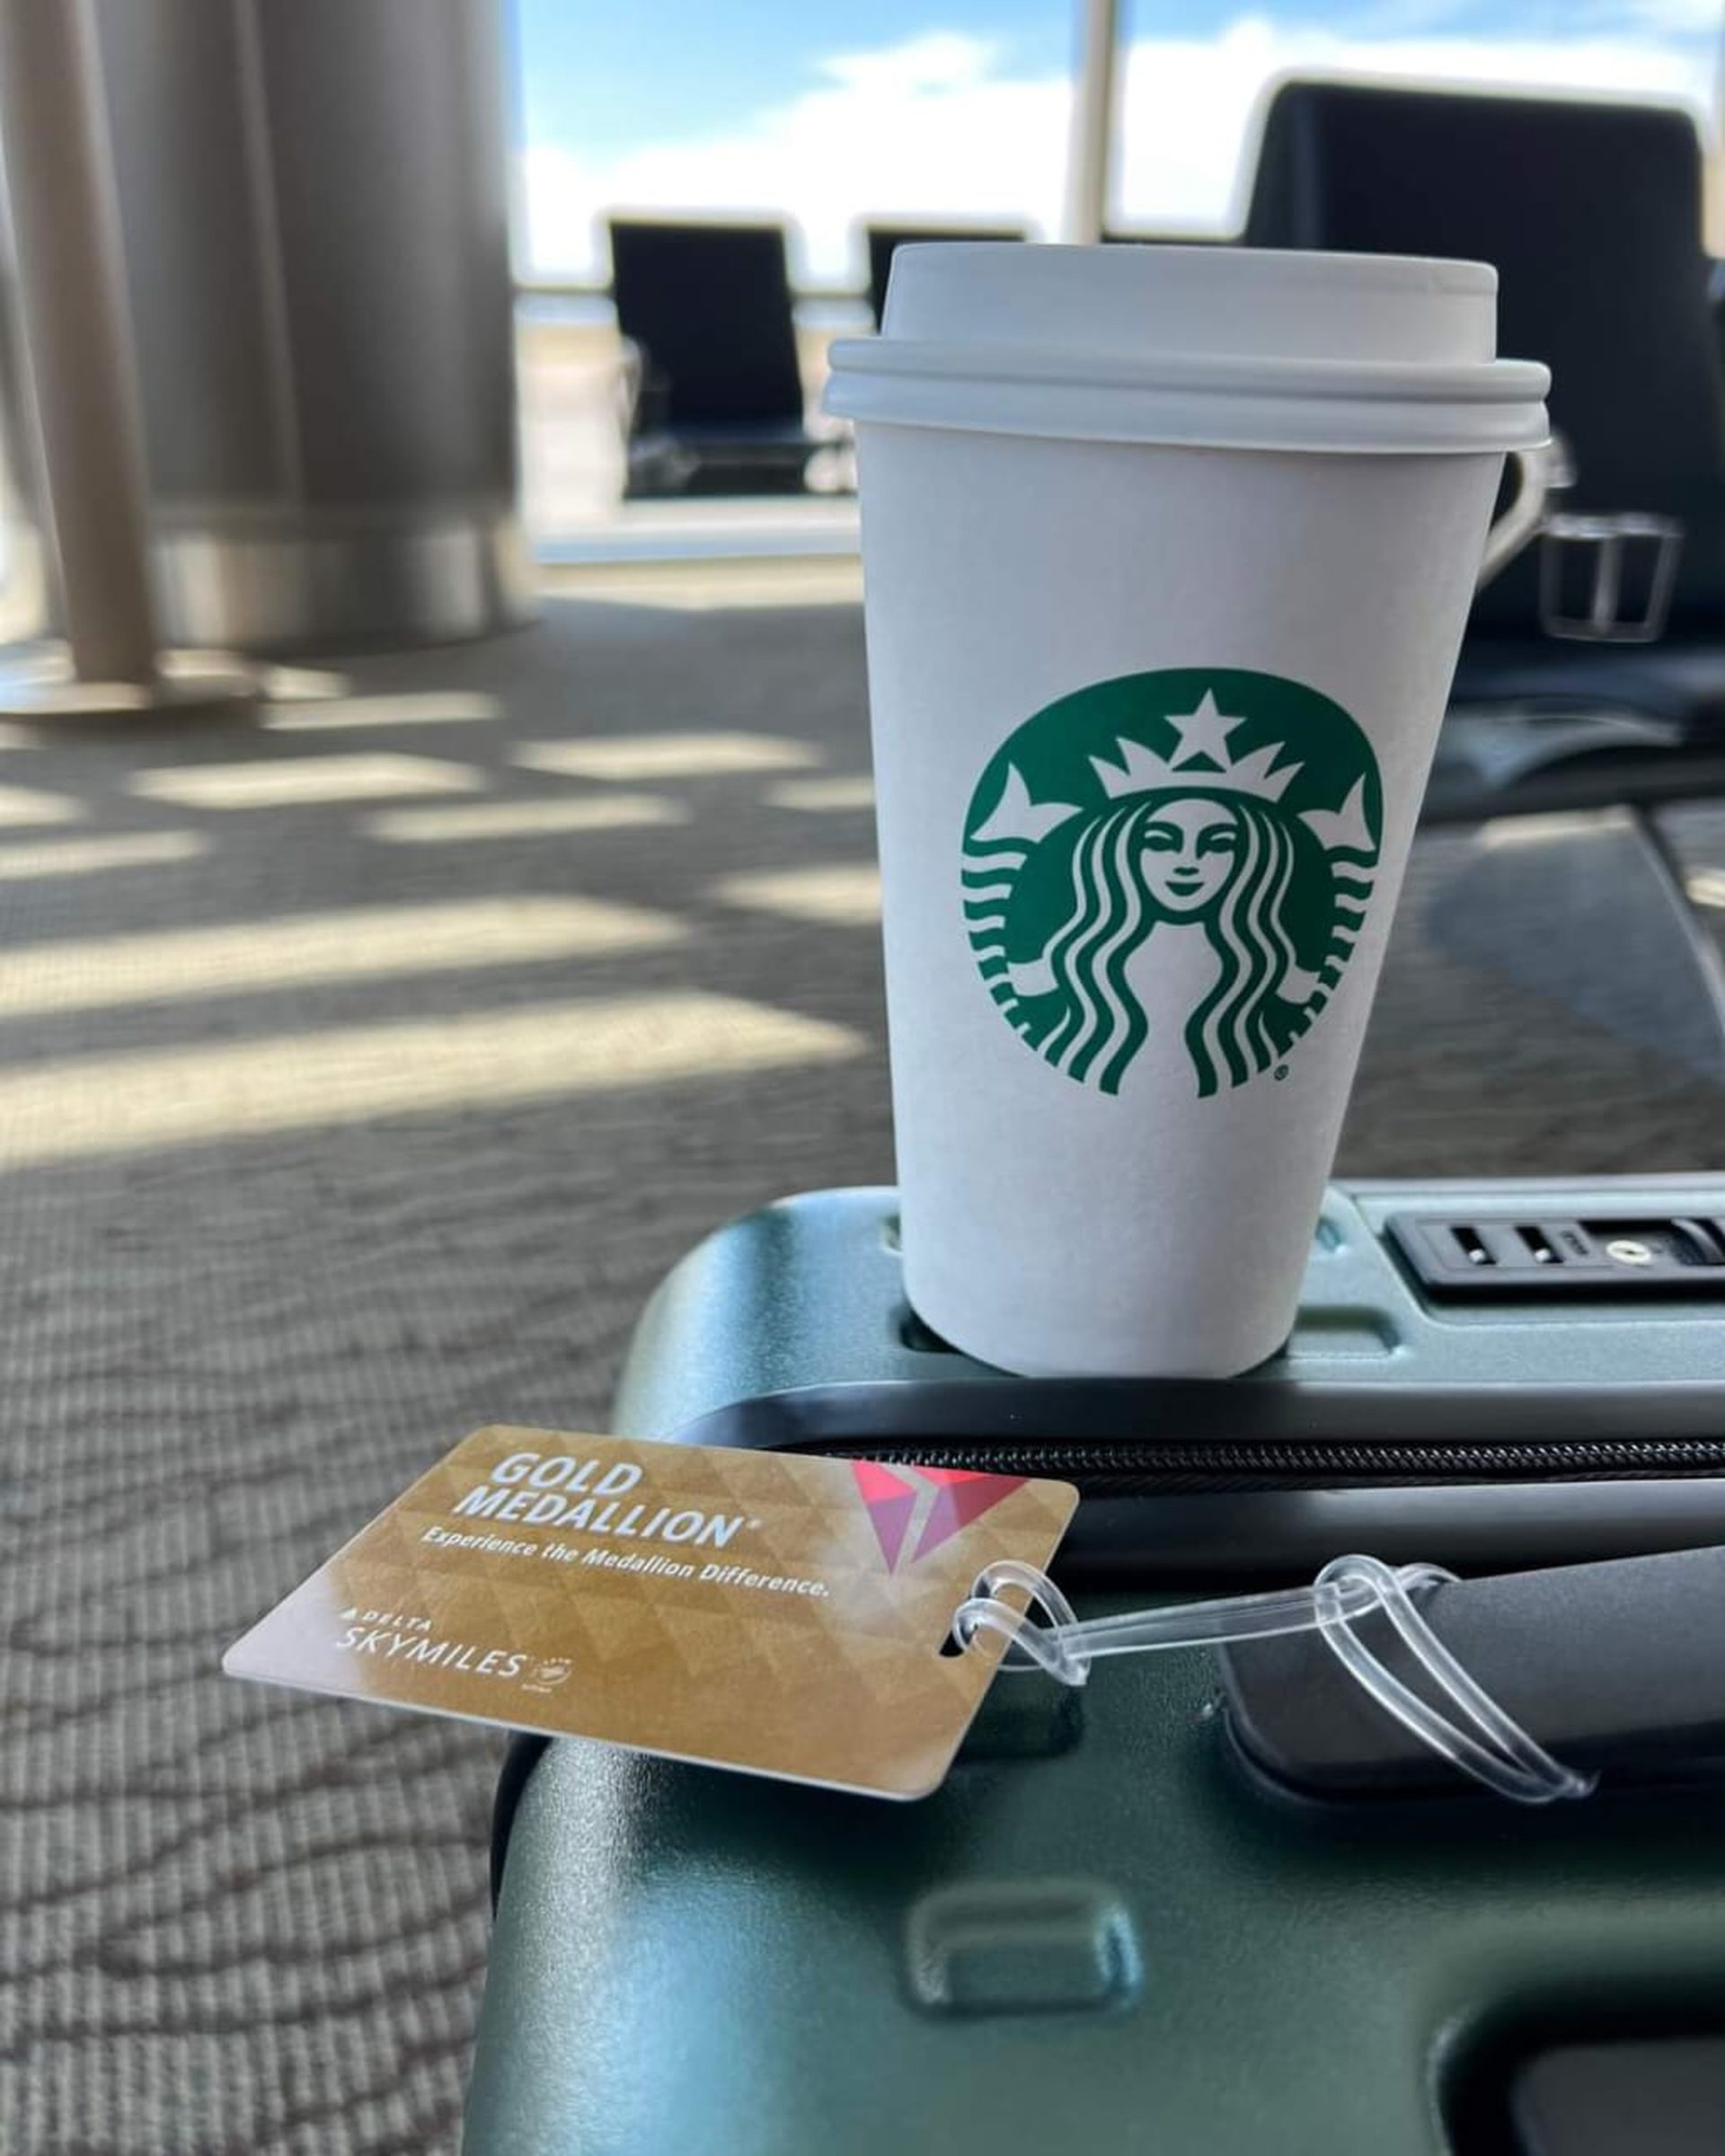 Deltastarbucks: How to link Starbucks and Delta?